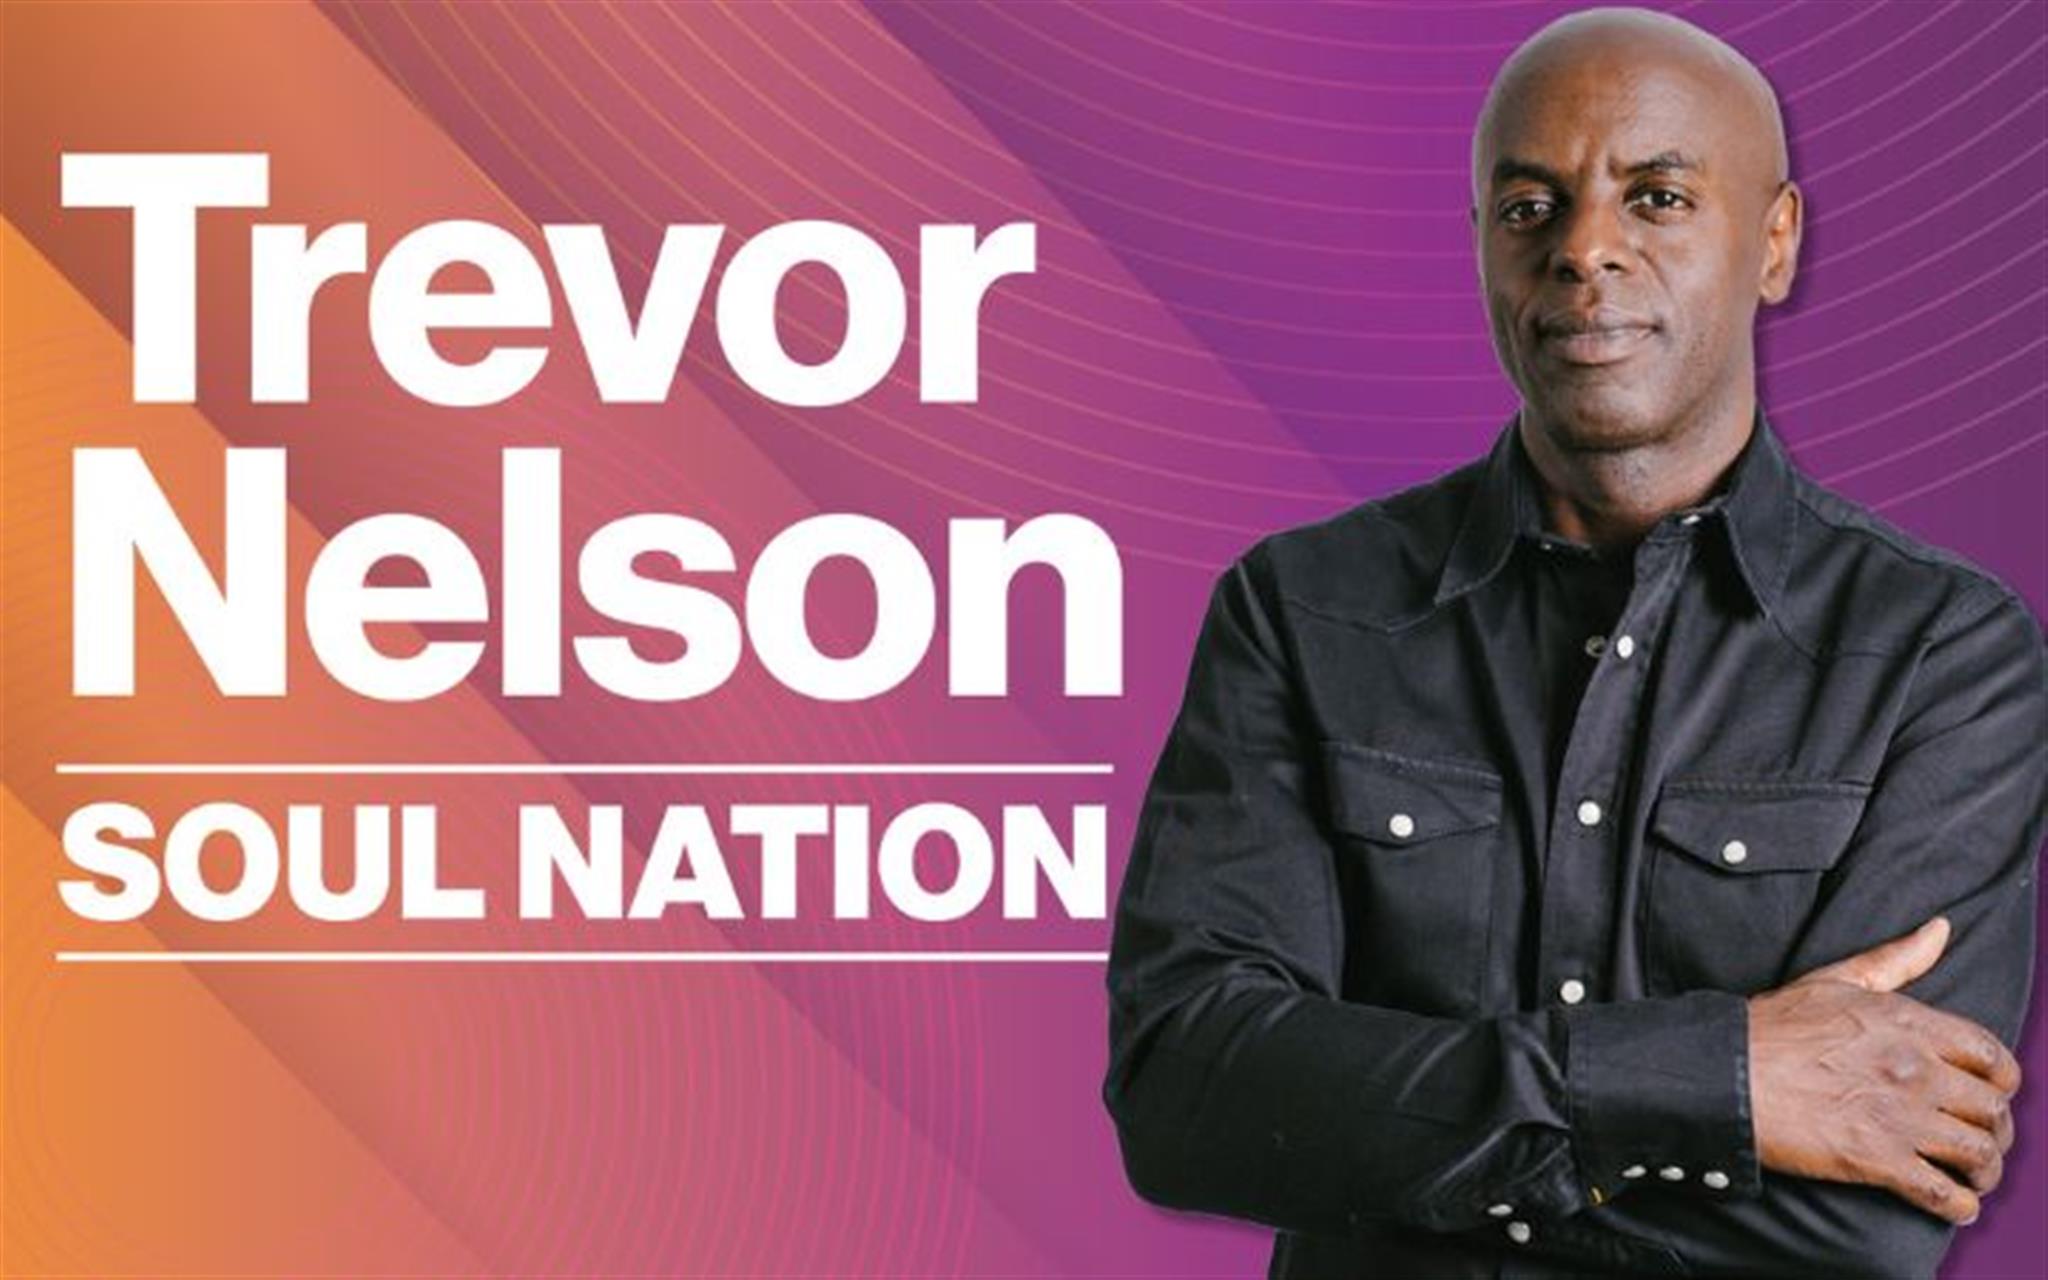 Trevor Nelson’s Soul Nation image